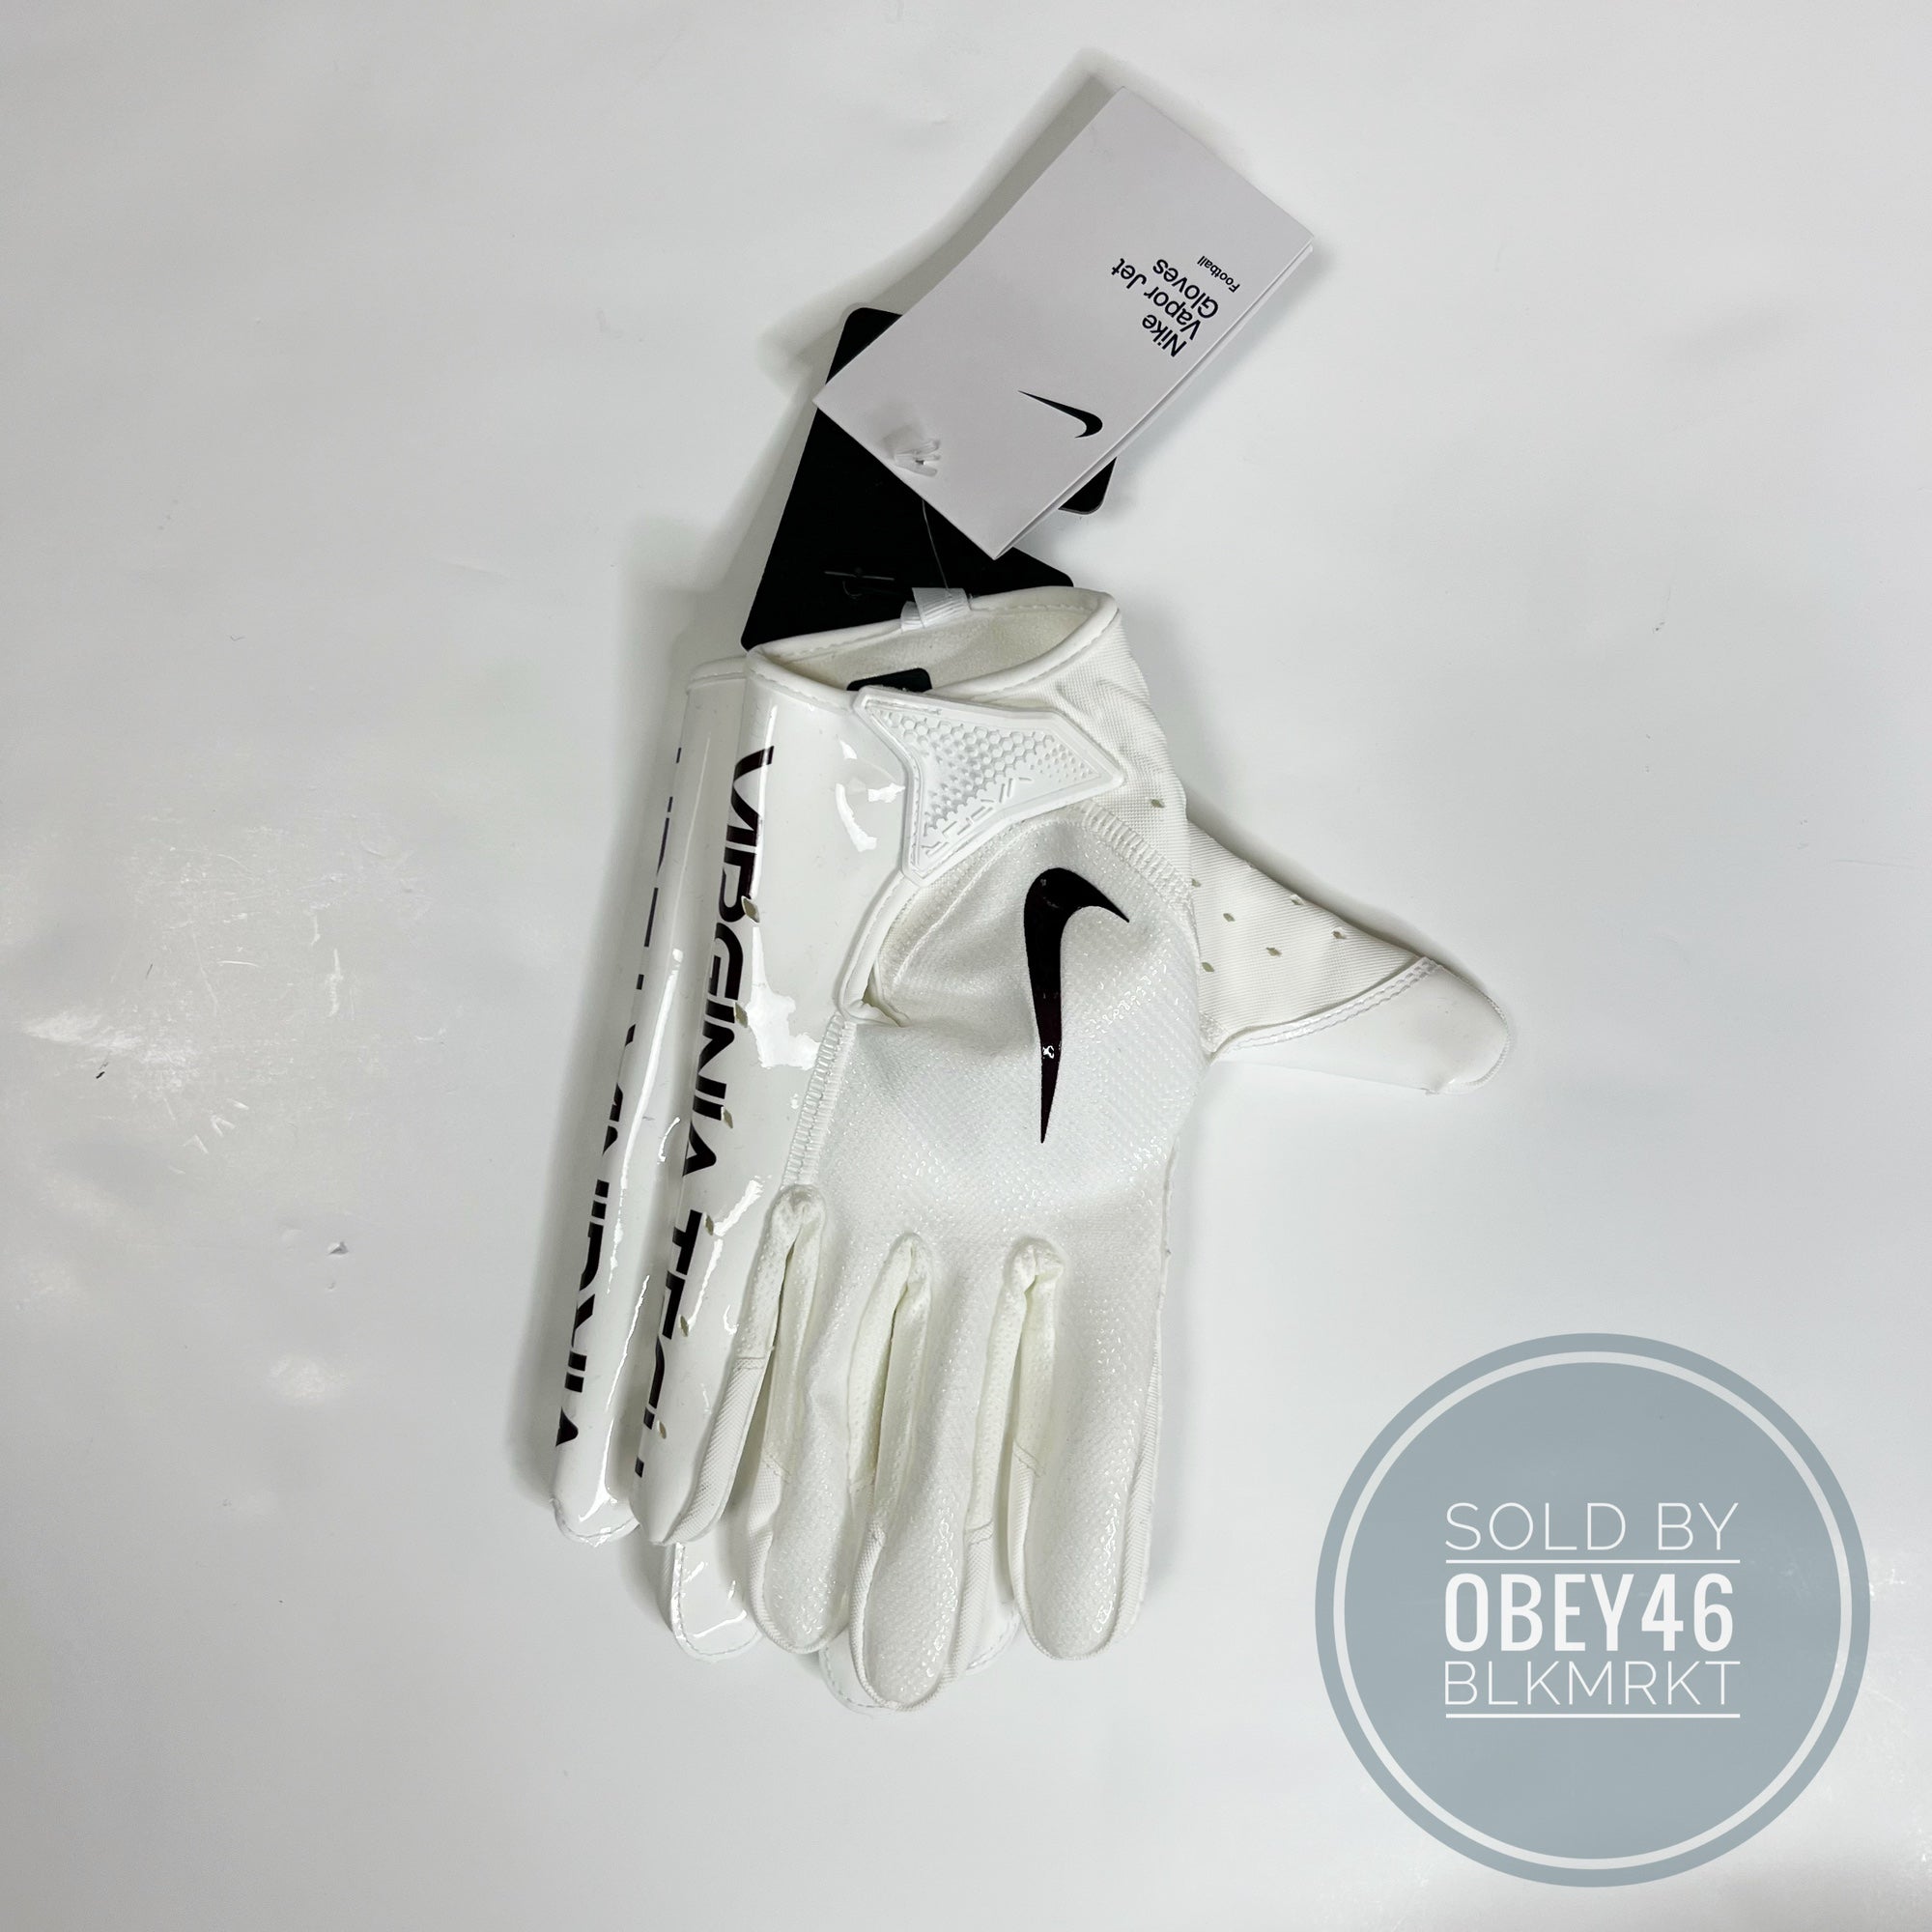 Nike Vapor Jet Buccaneers Skill Football Gloves Pewter/Red PGF902-223 Men  Size L